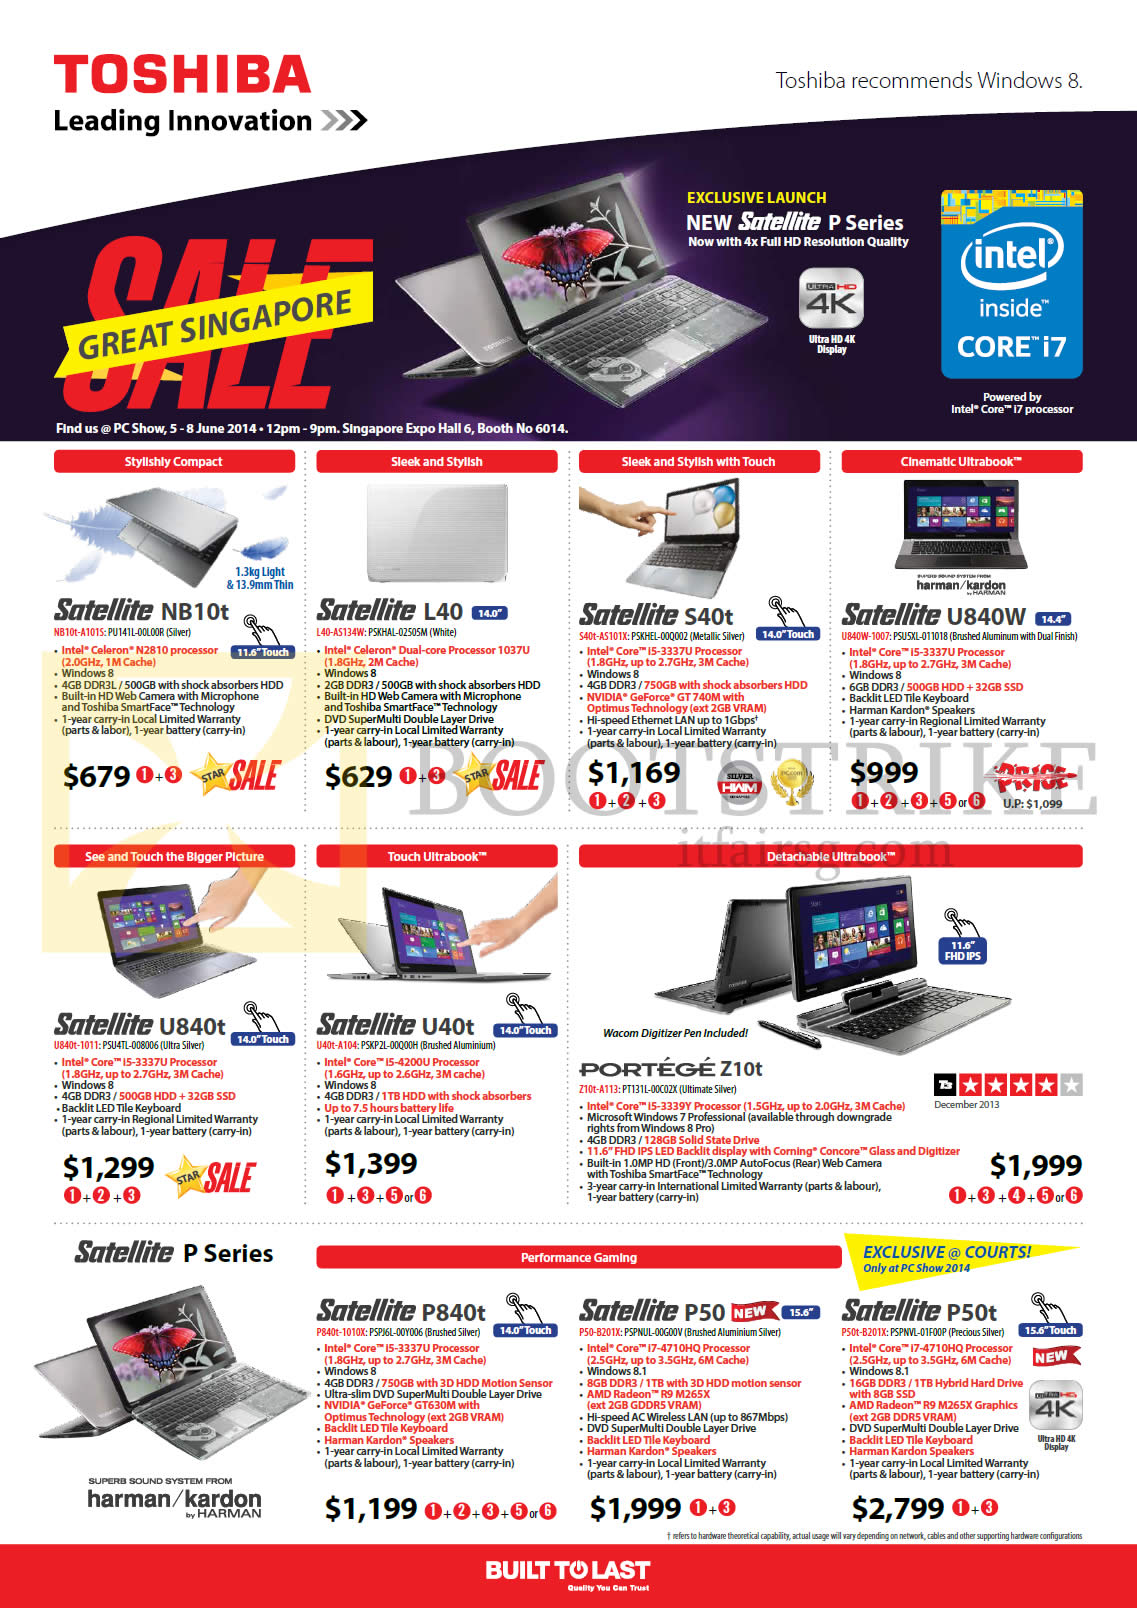 PC SHOW 2014 price list image brochure of Toshiba Notebooks Satellite NB10t, L40, S40t, U840W, U840t, U40t, P840t, P50, P50t, Portege Z10t